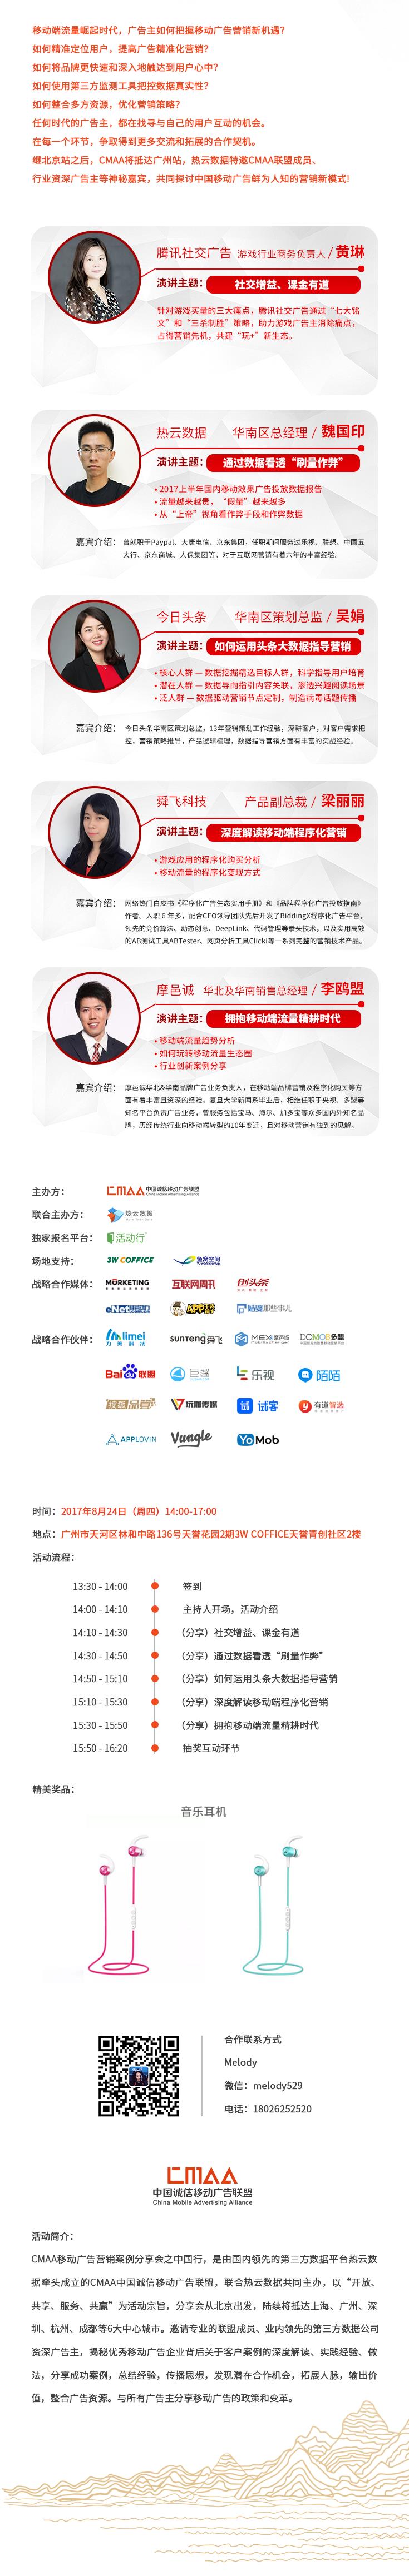 CMAA中国行广州站活动行页面.png